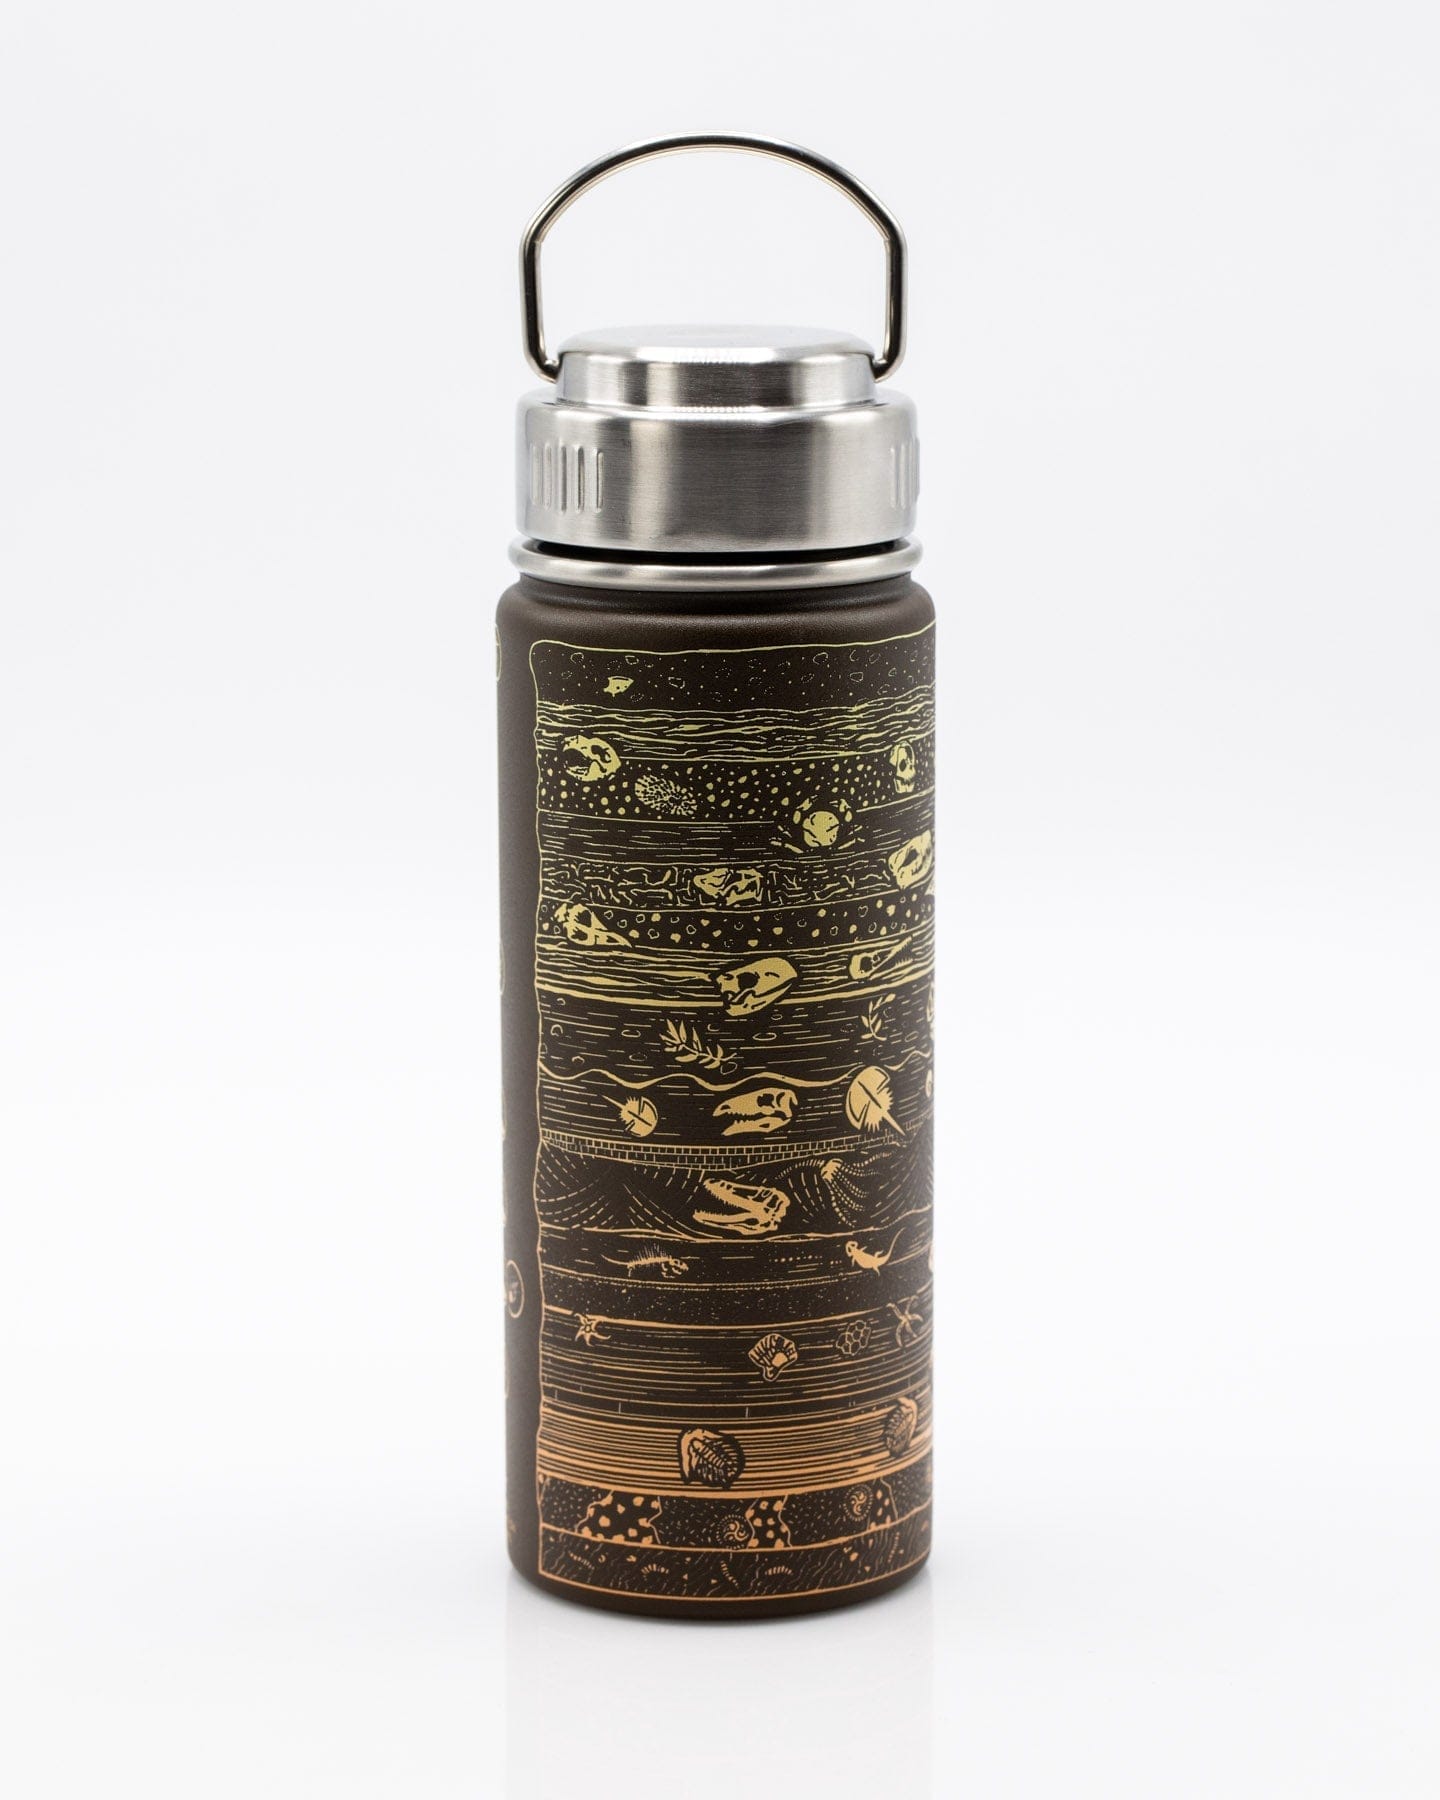 Swissgear 18 oz Stainless Steel Insulated Bottle